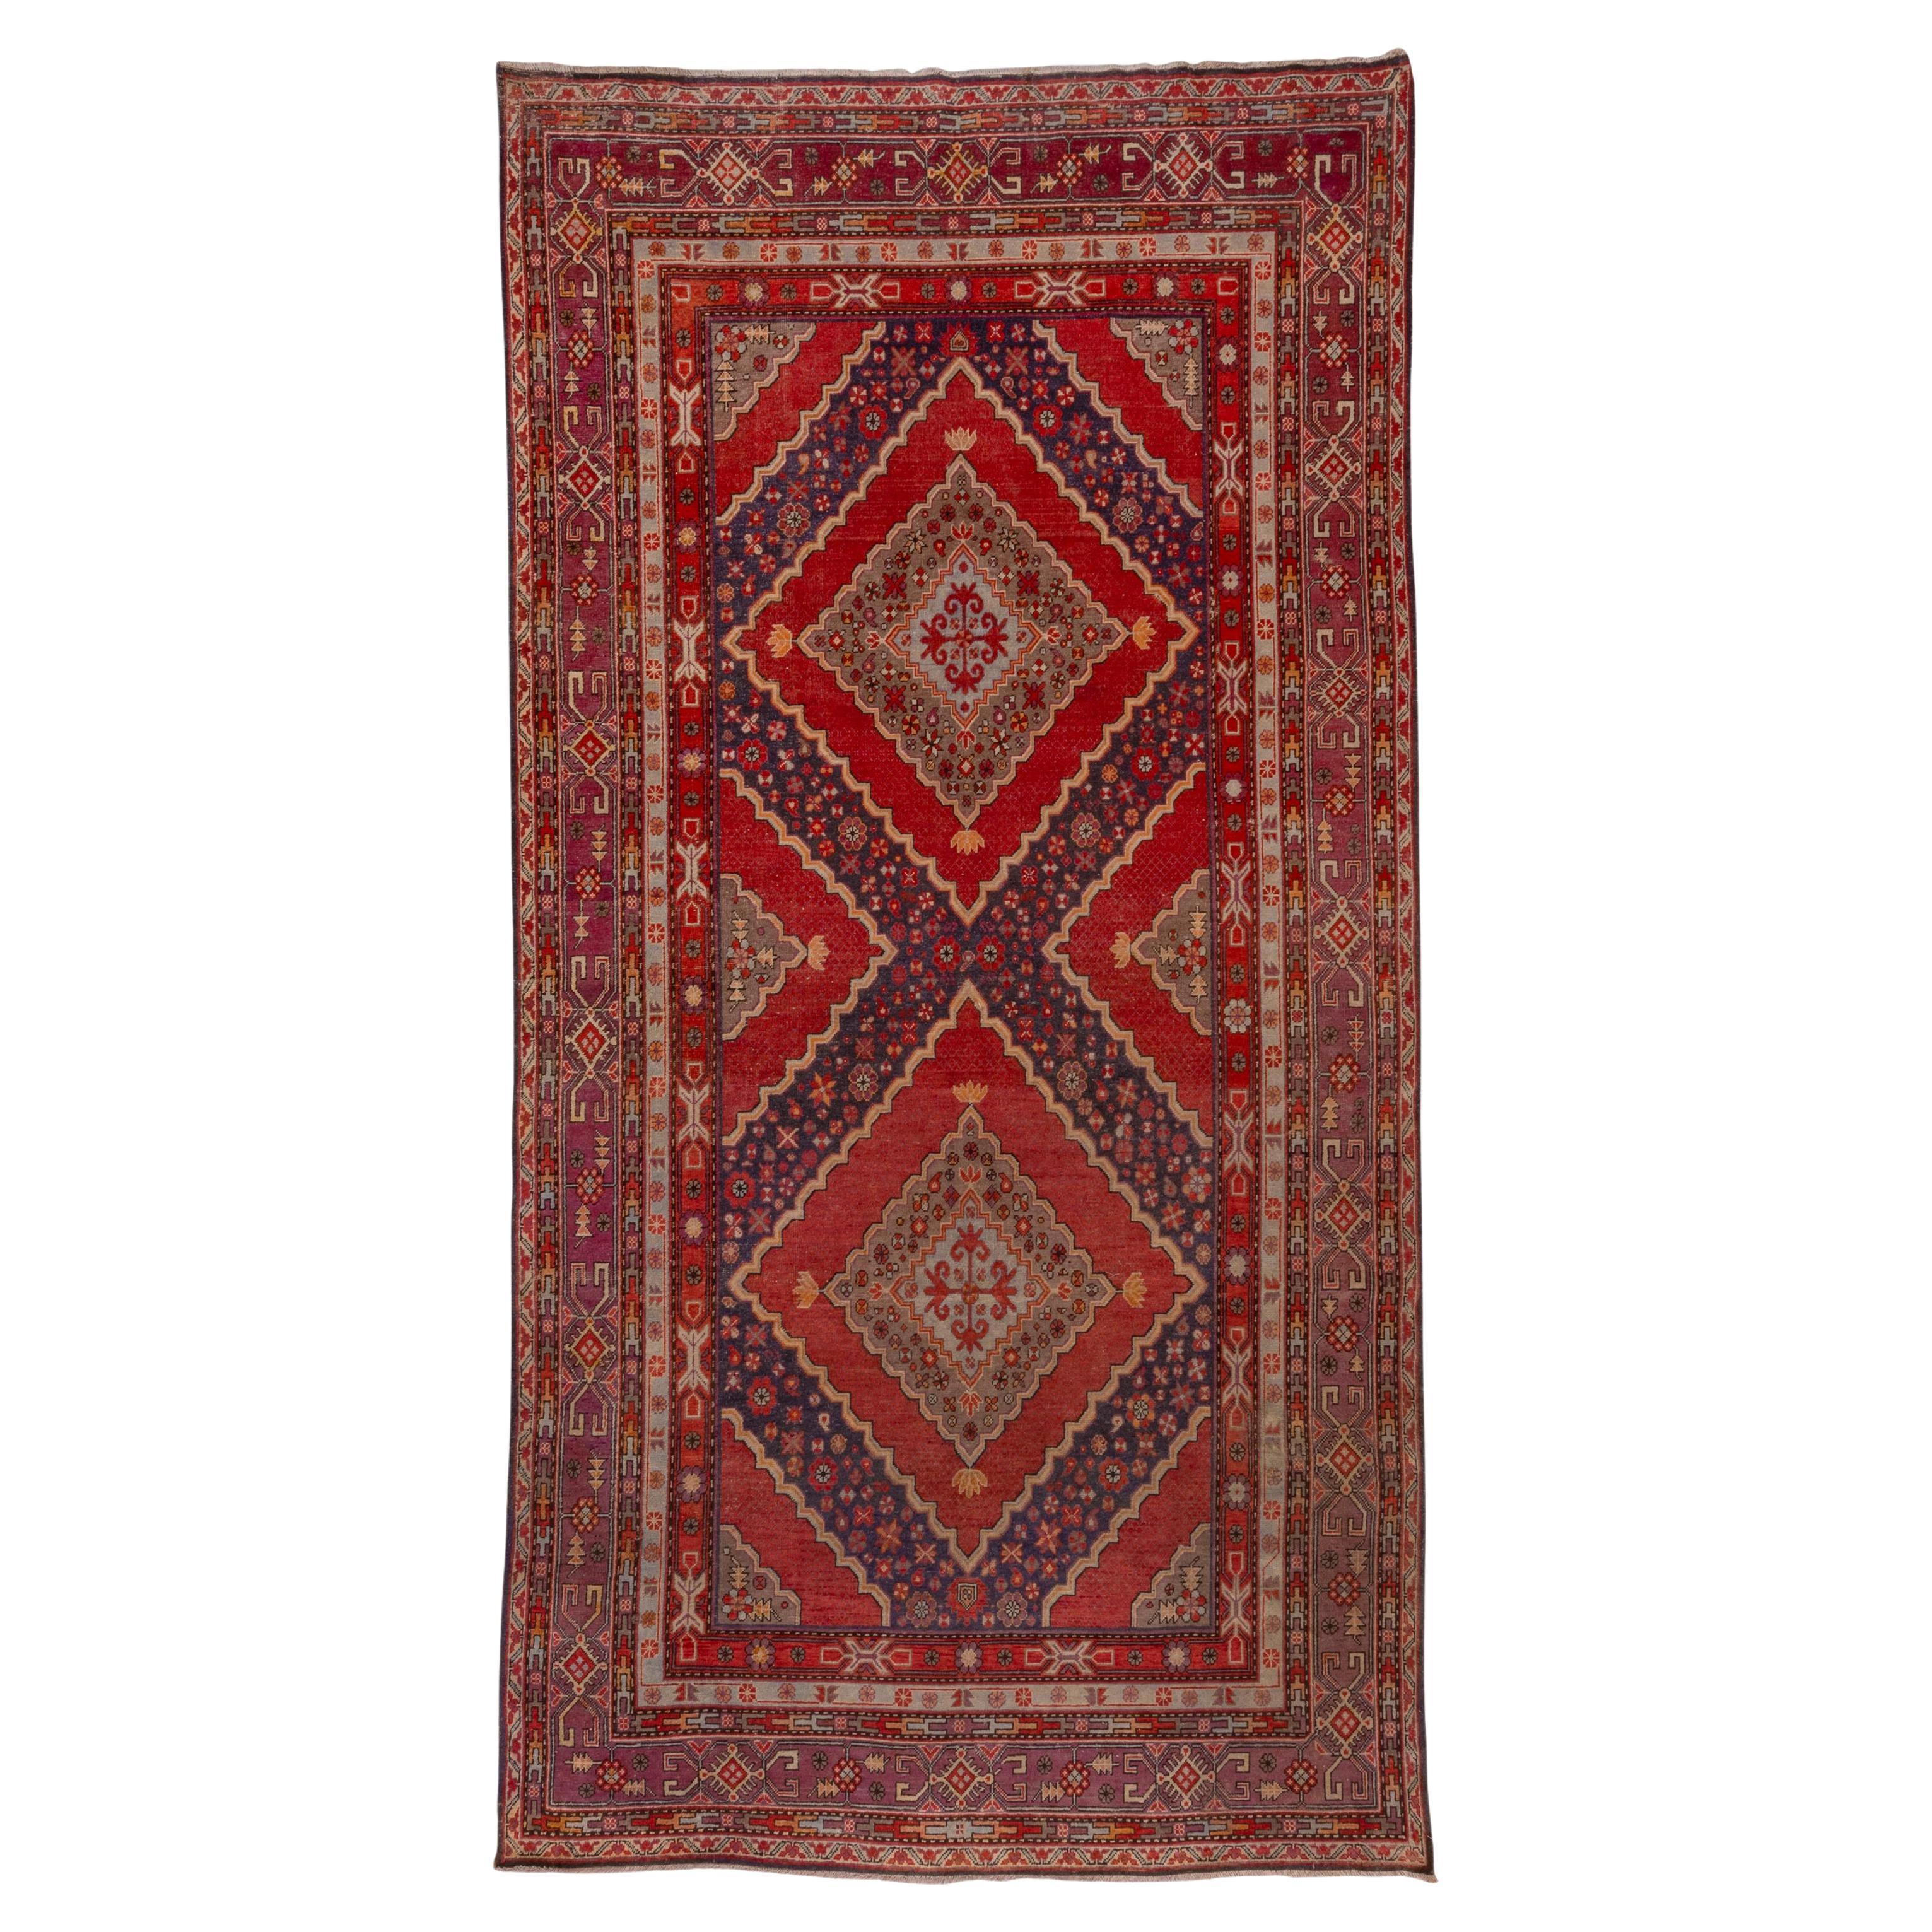 Antiker roter Khotan-Teppich, ca. 1920er Jahre